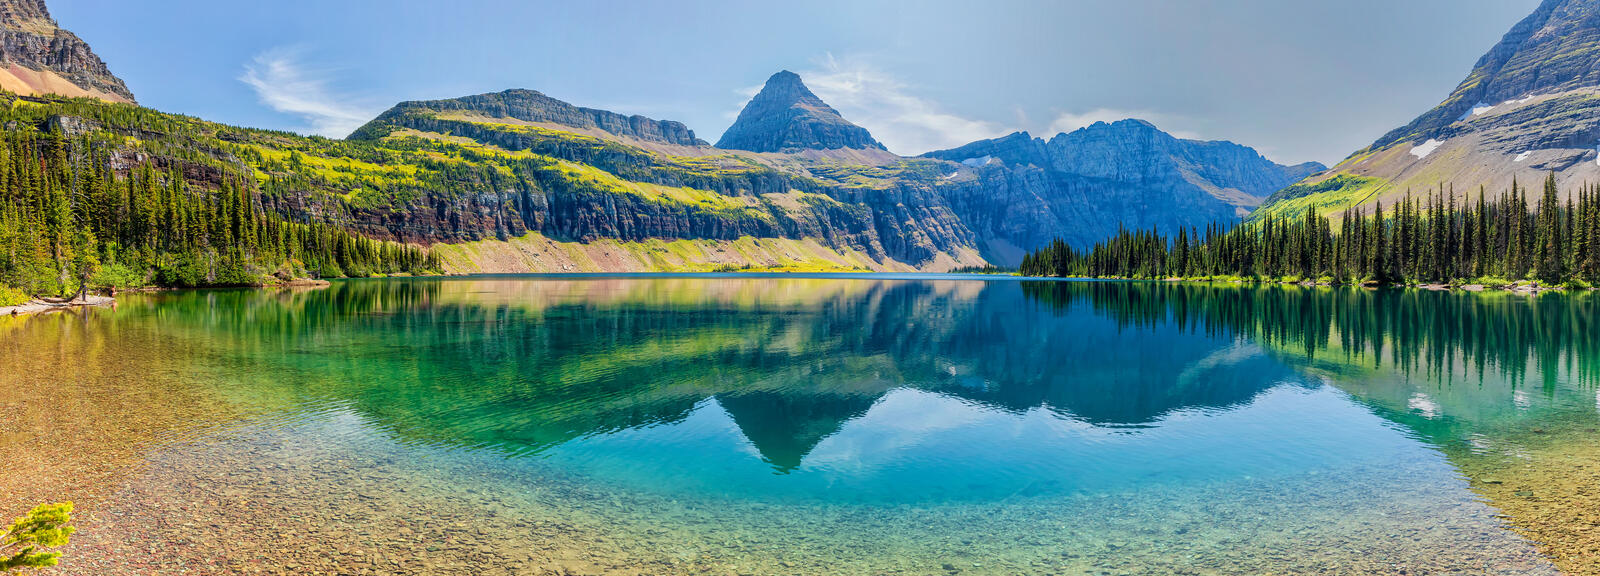 Обои Hidden Lake Glacier National Park Canada на рабочий стол